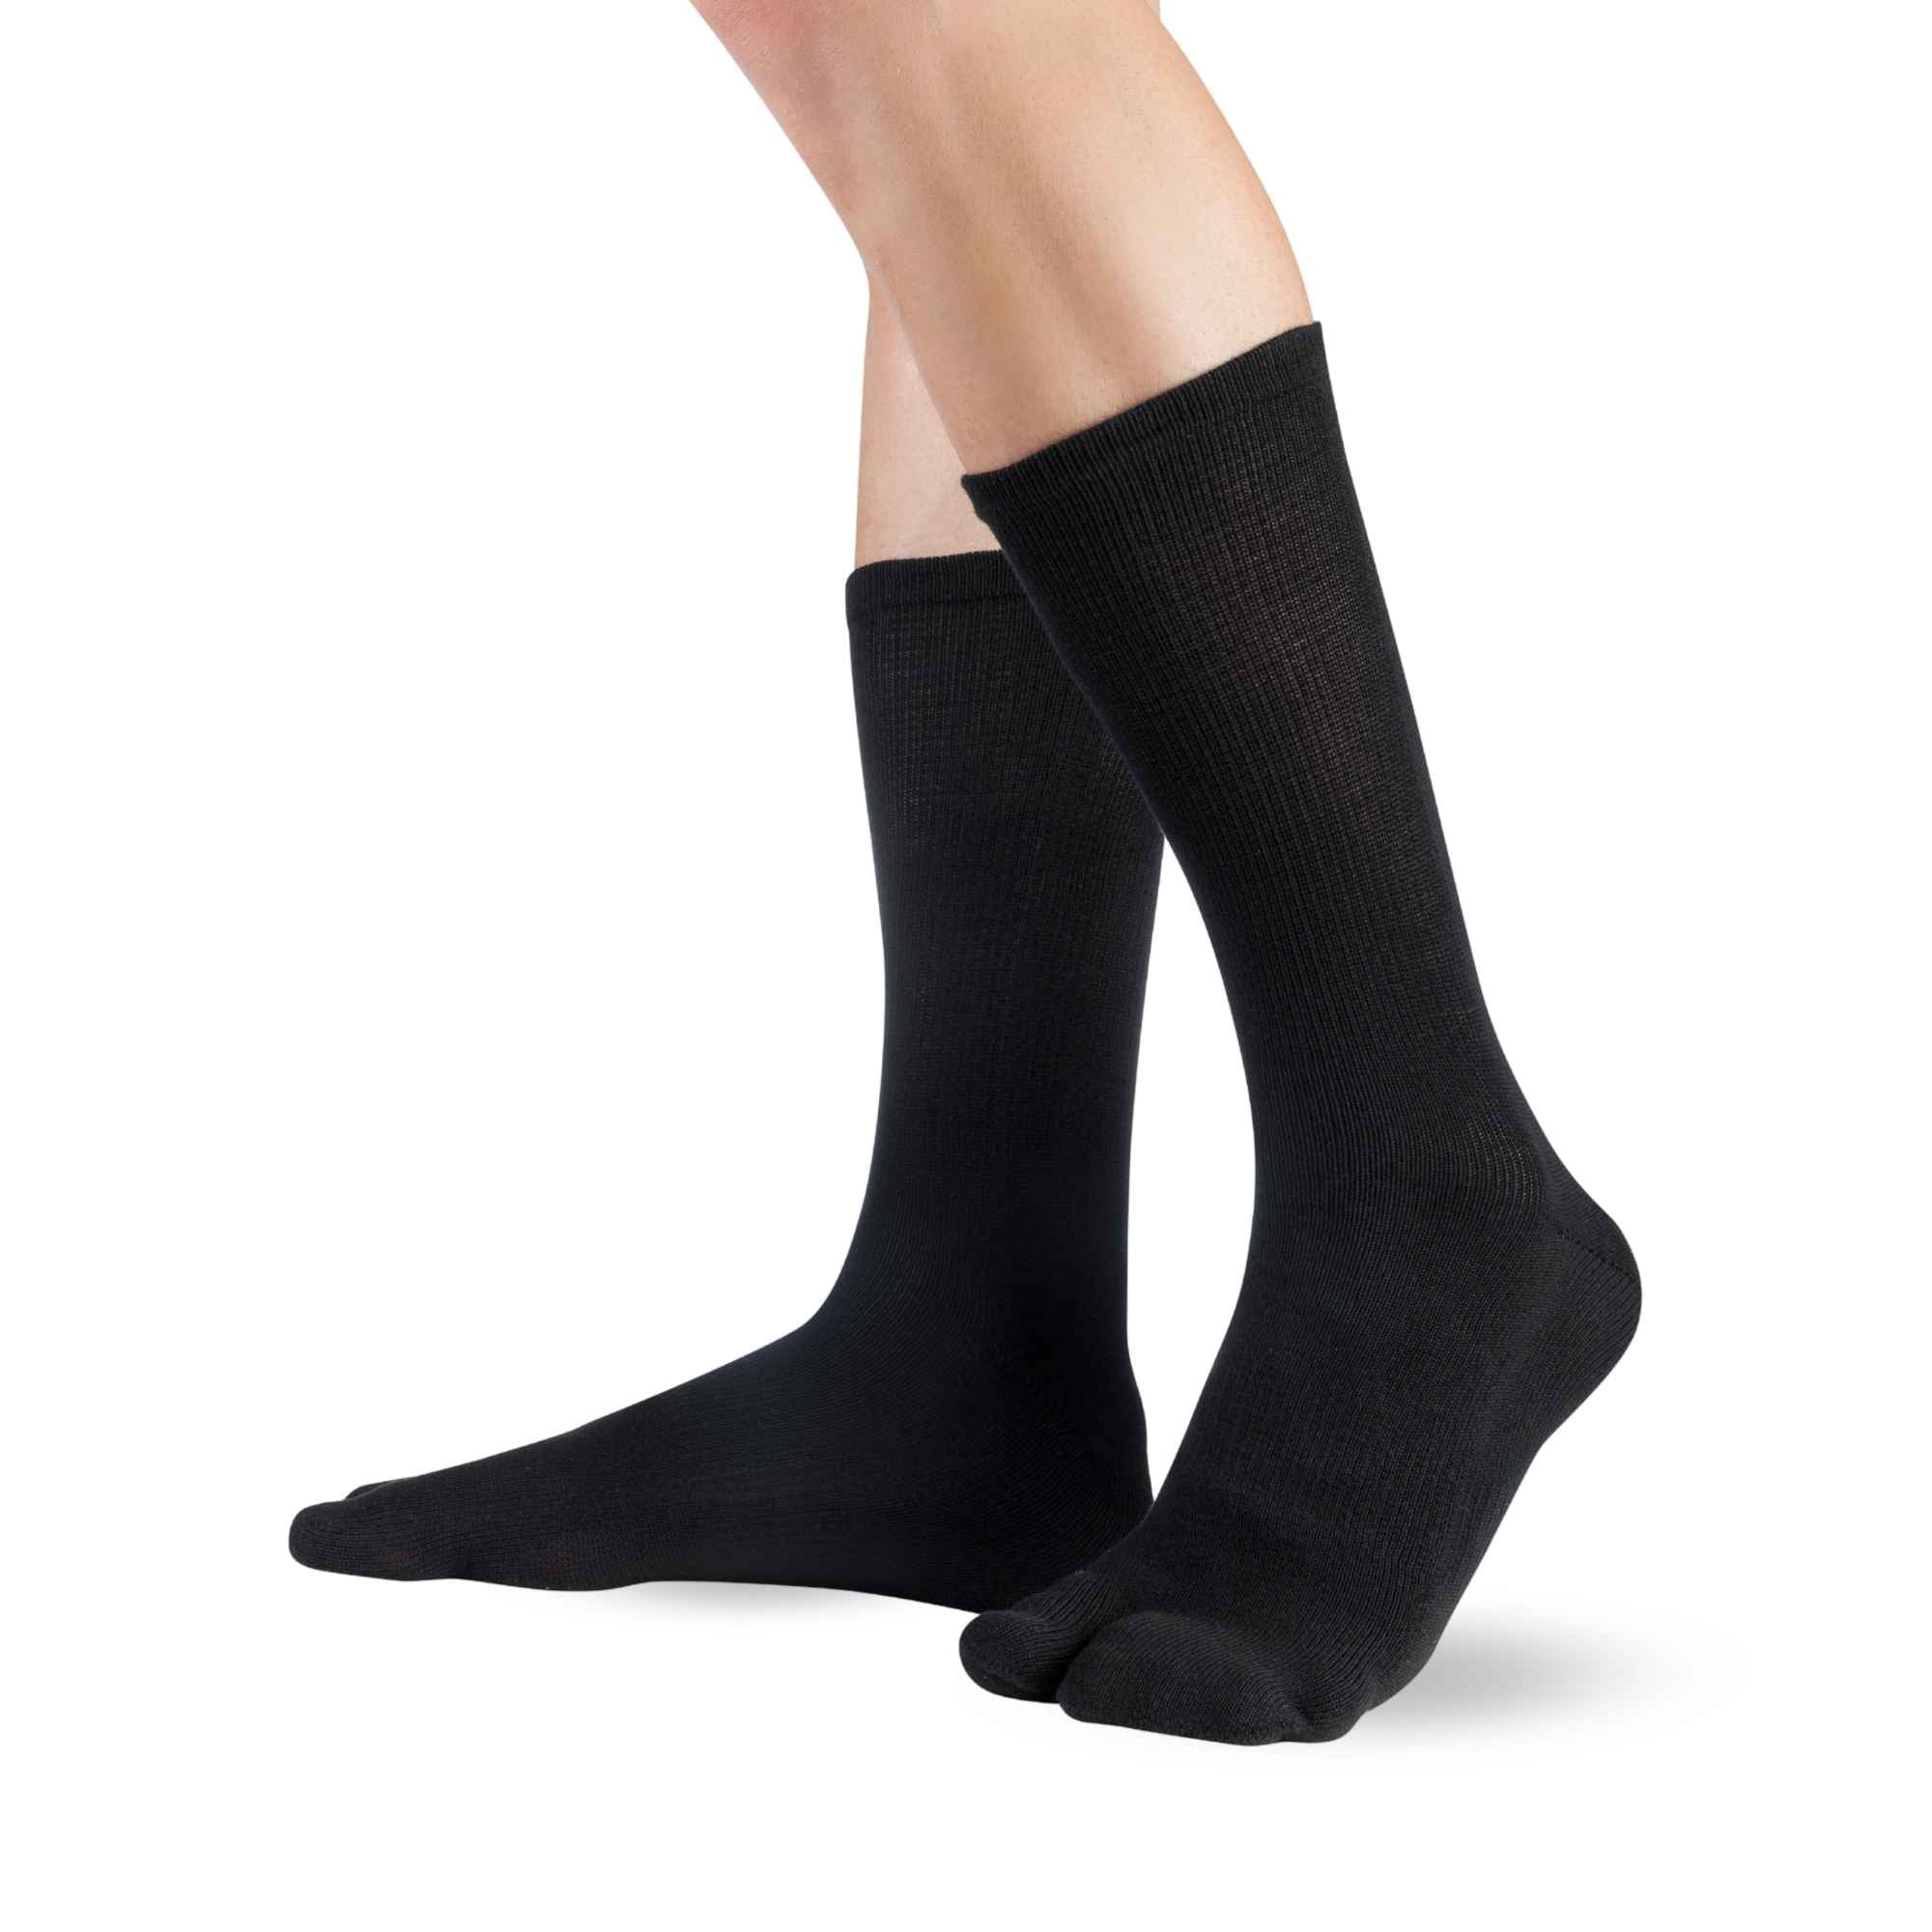 Tabi mid-calf, 3pcs economy pack - Knitido®. The toe socks